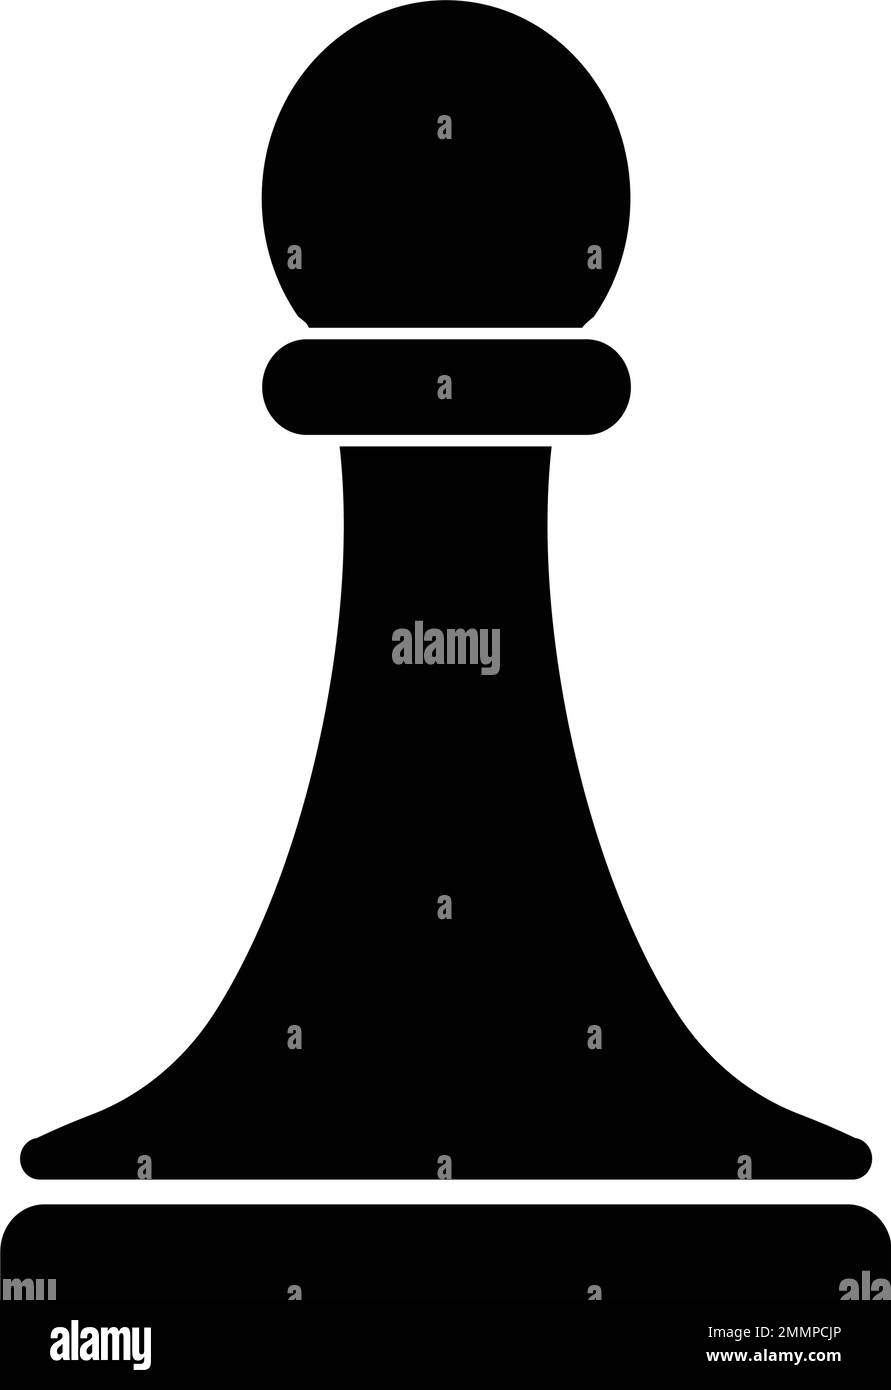 pawn chess icon illustration design Stock Vector